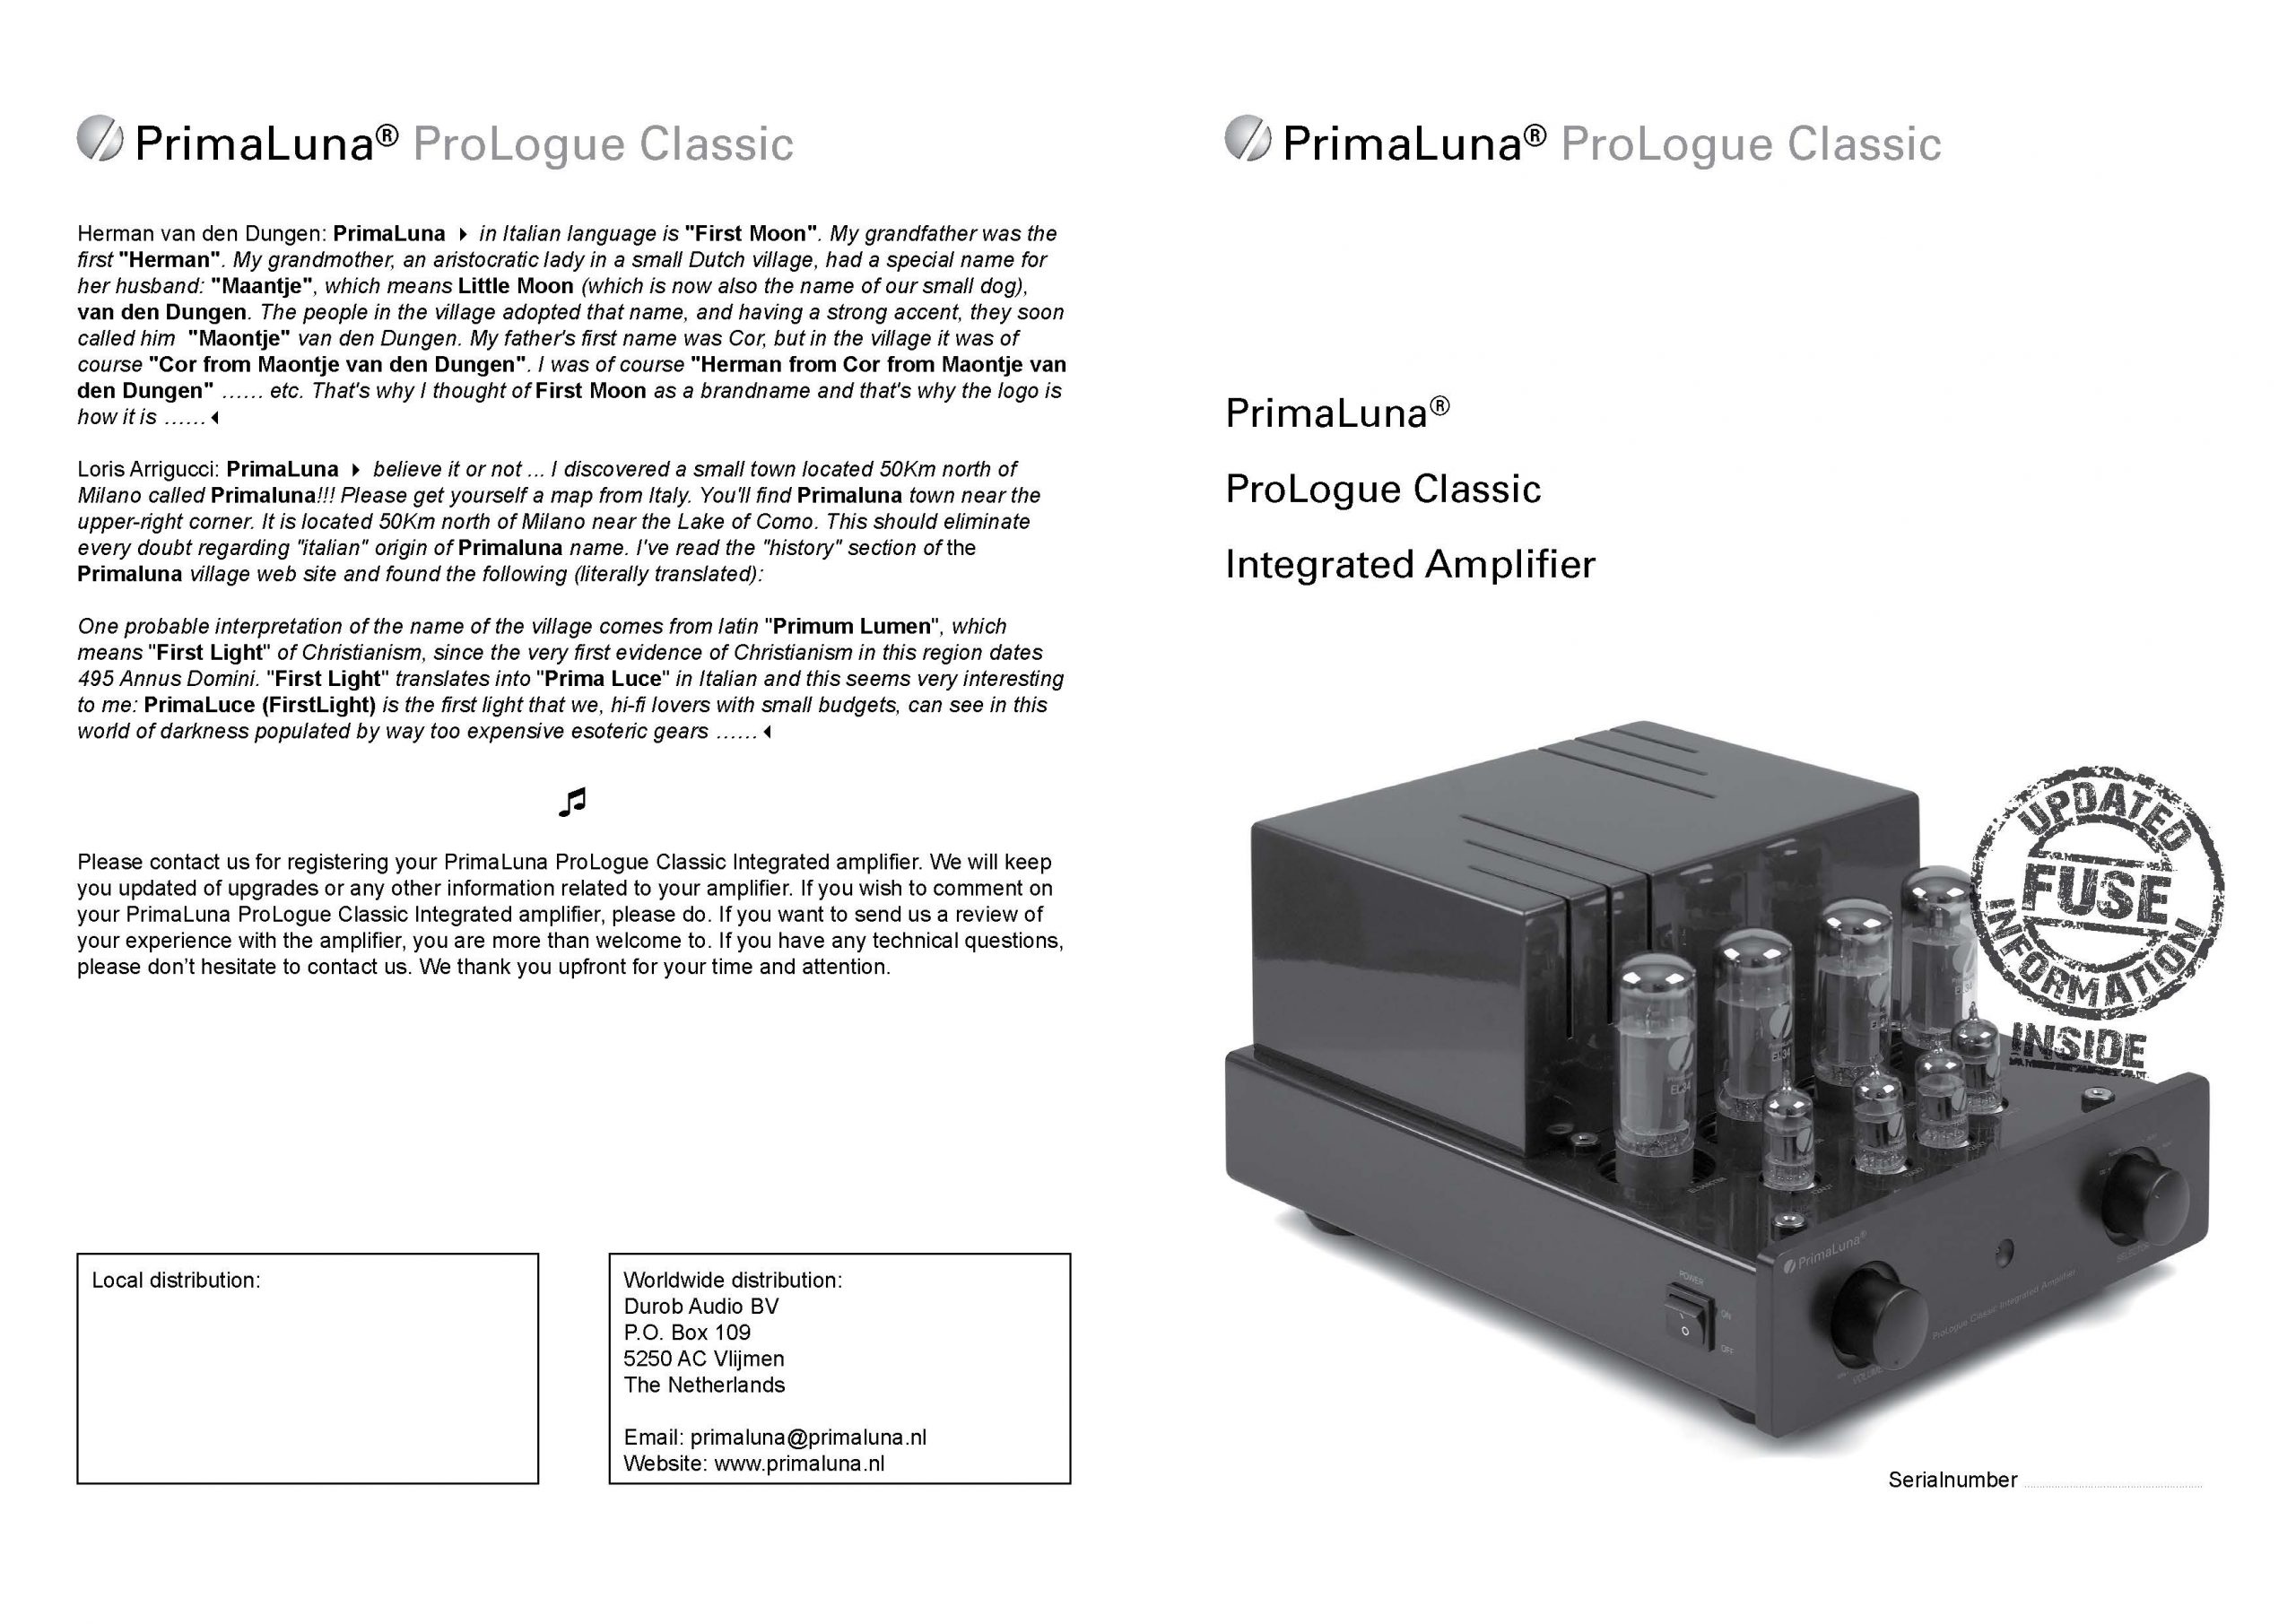 PrimaLuna ProLogue Classic Integrated Amplifier User Manual - Norman Audio